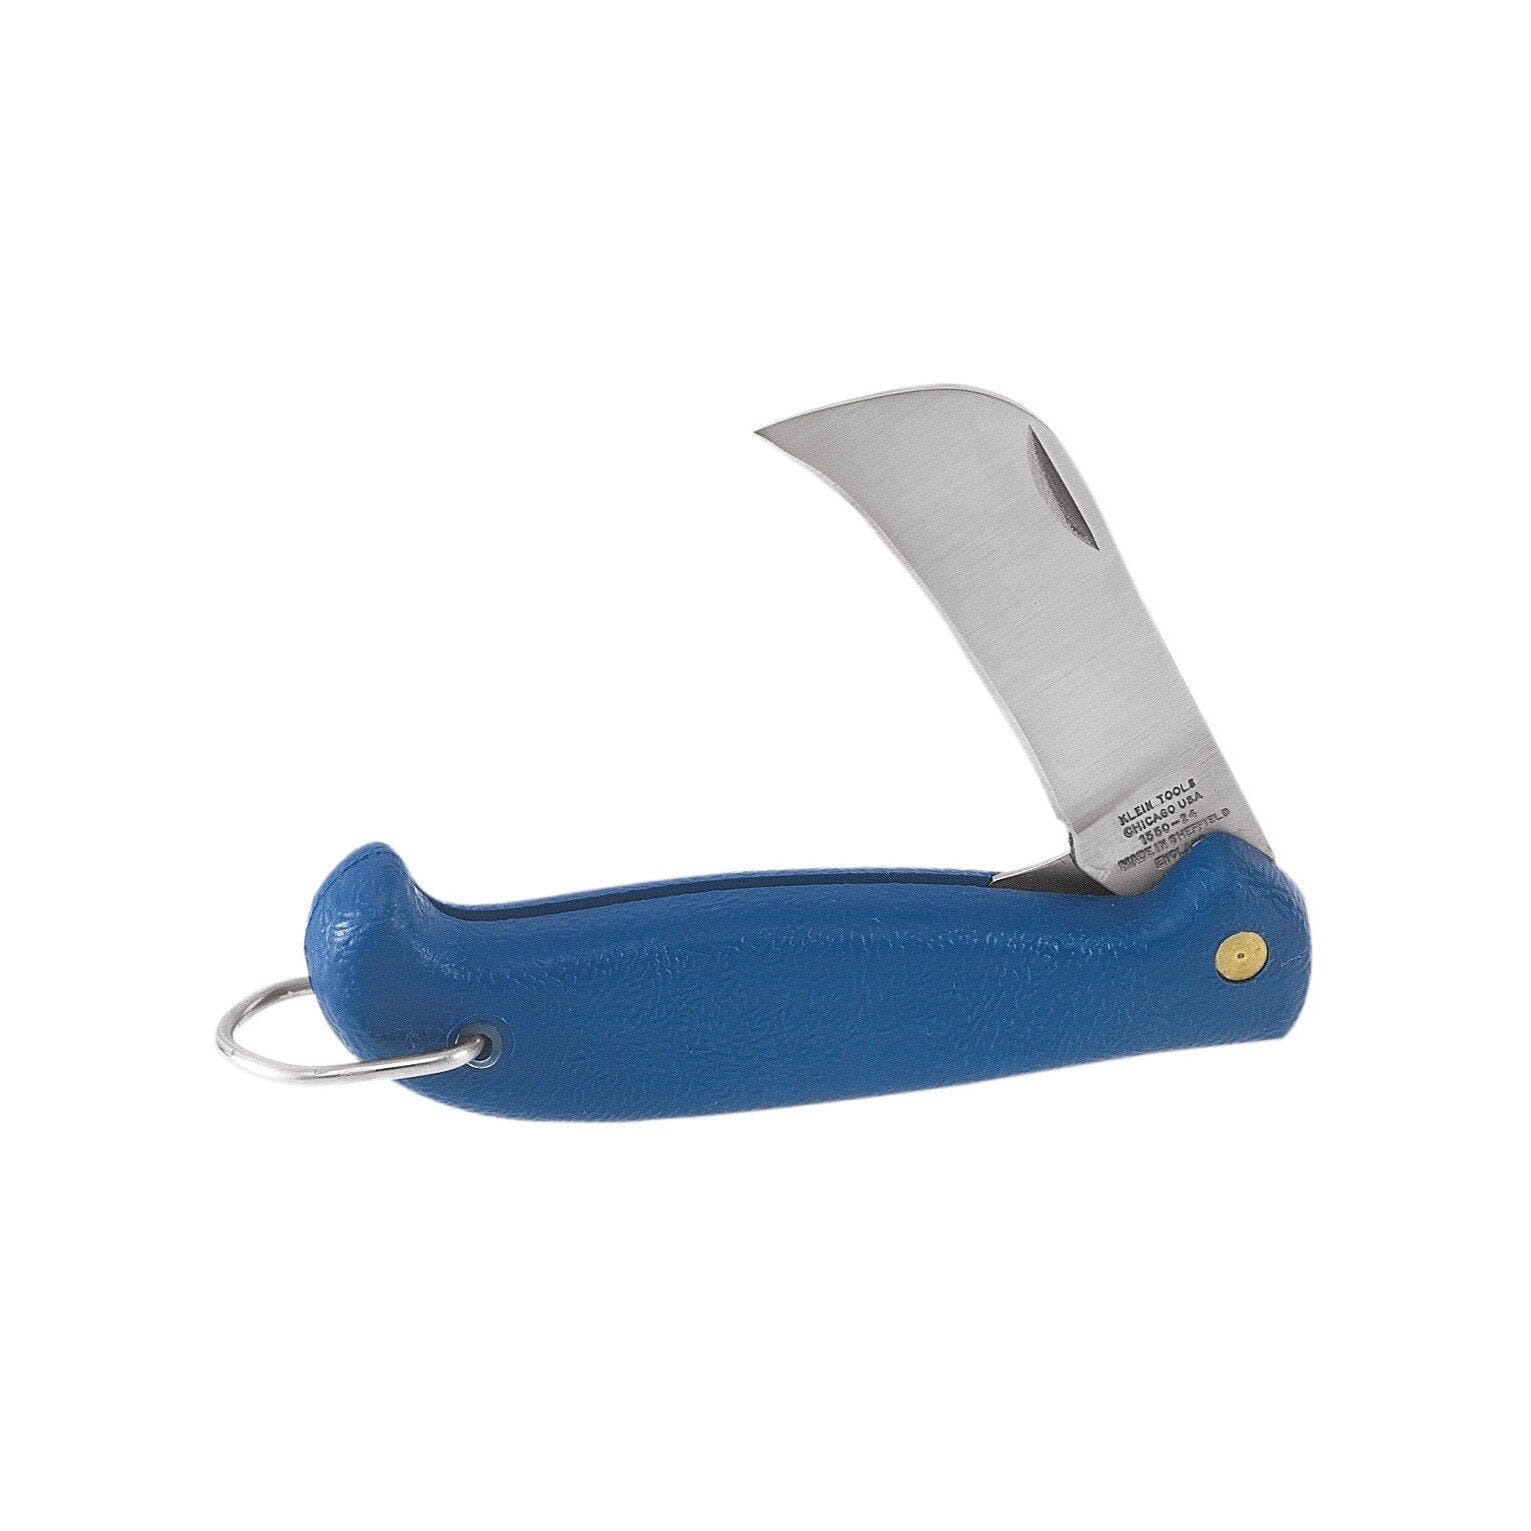 Klein Skinning Knife Stainless Steel 2-1/2'' Slitting Blade - 1550-24 Knives Klein Tools 